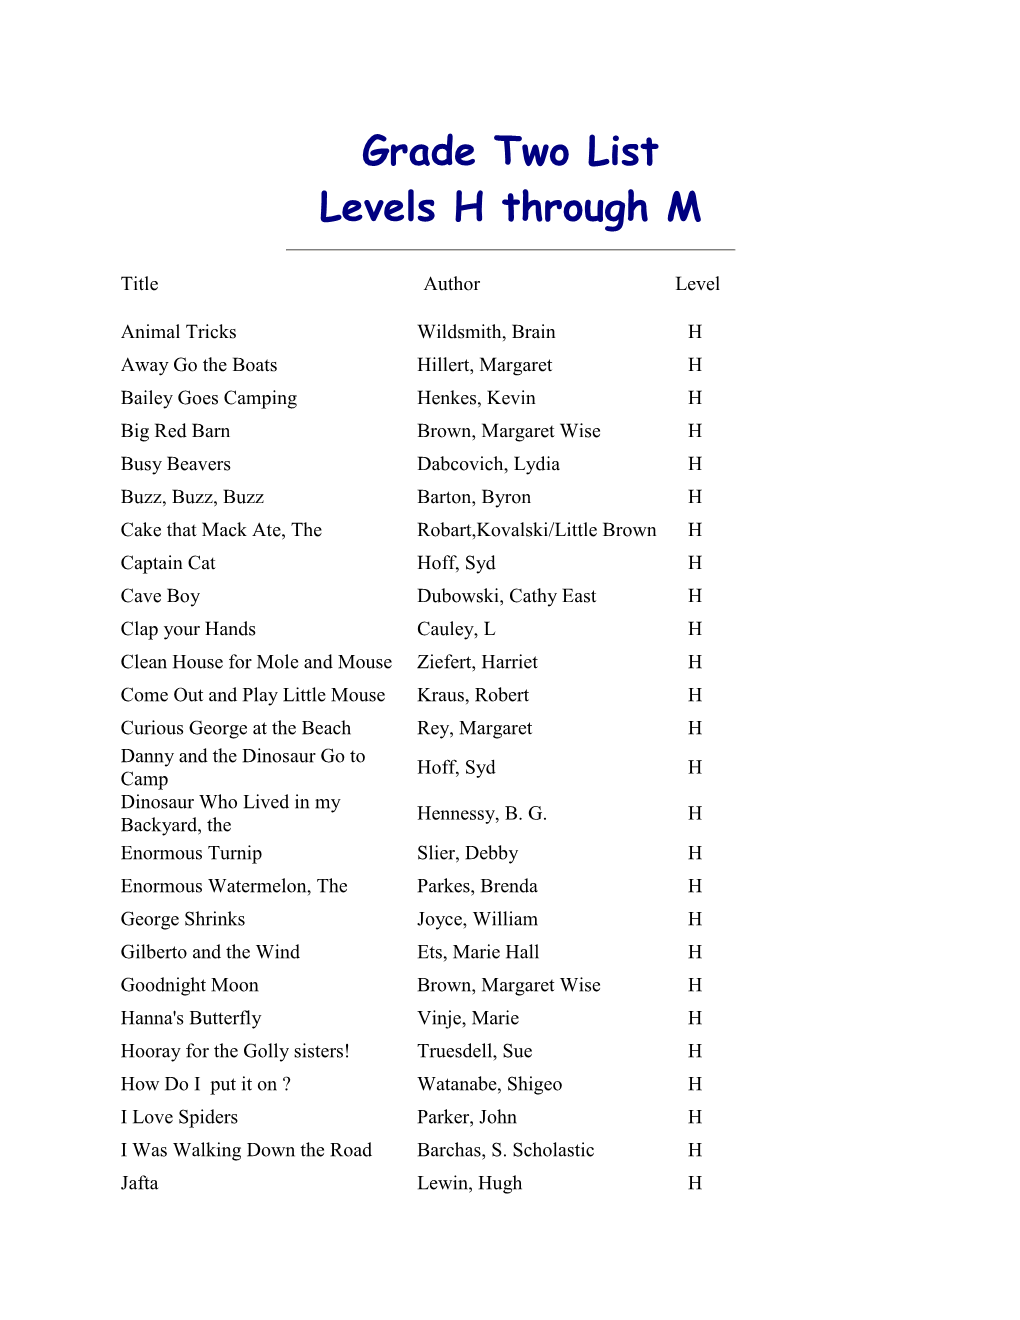 Grade Two List Levels H Through M